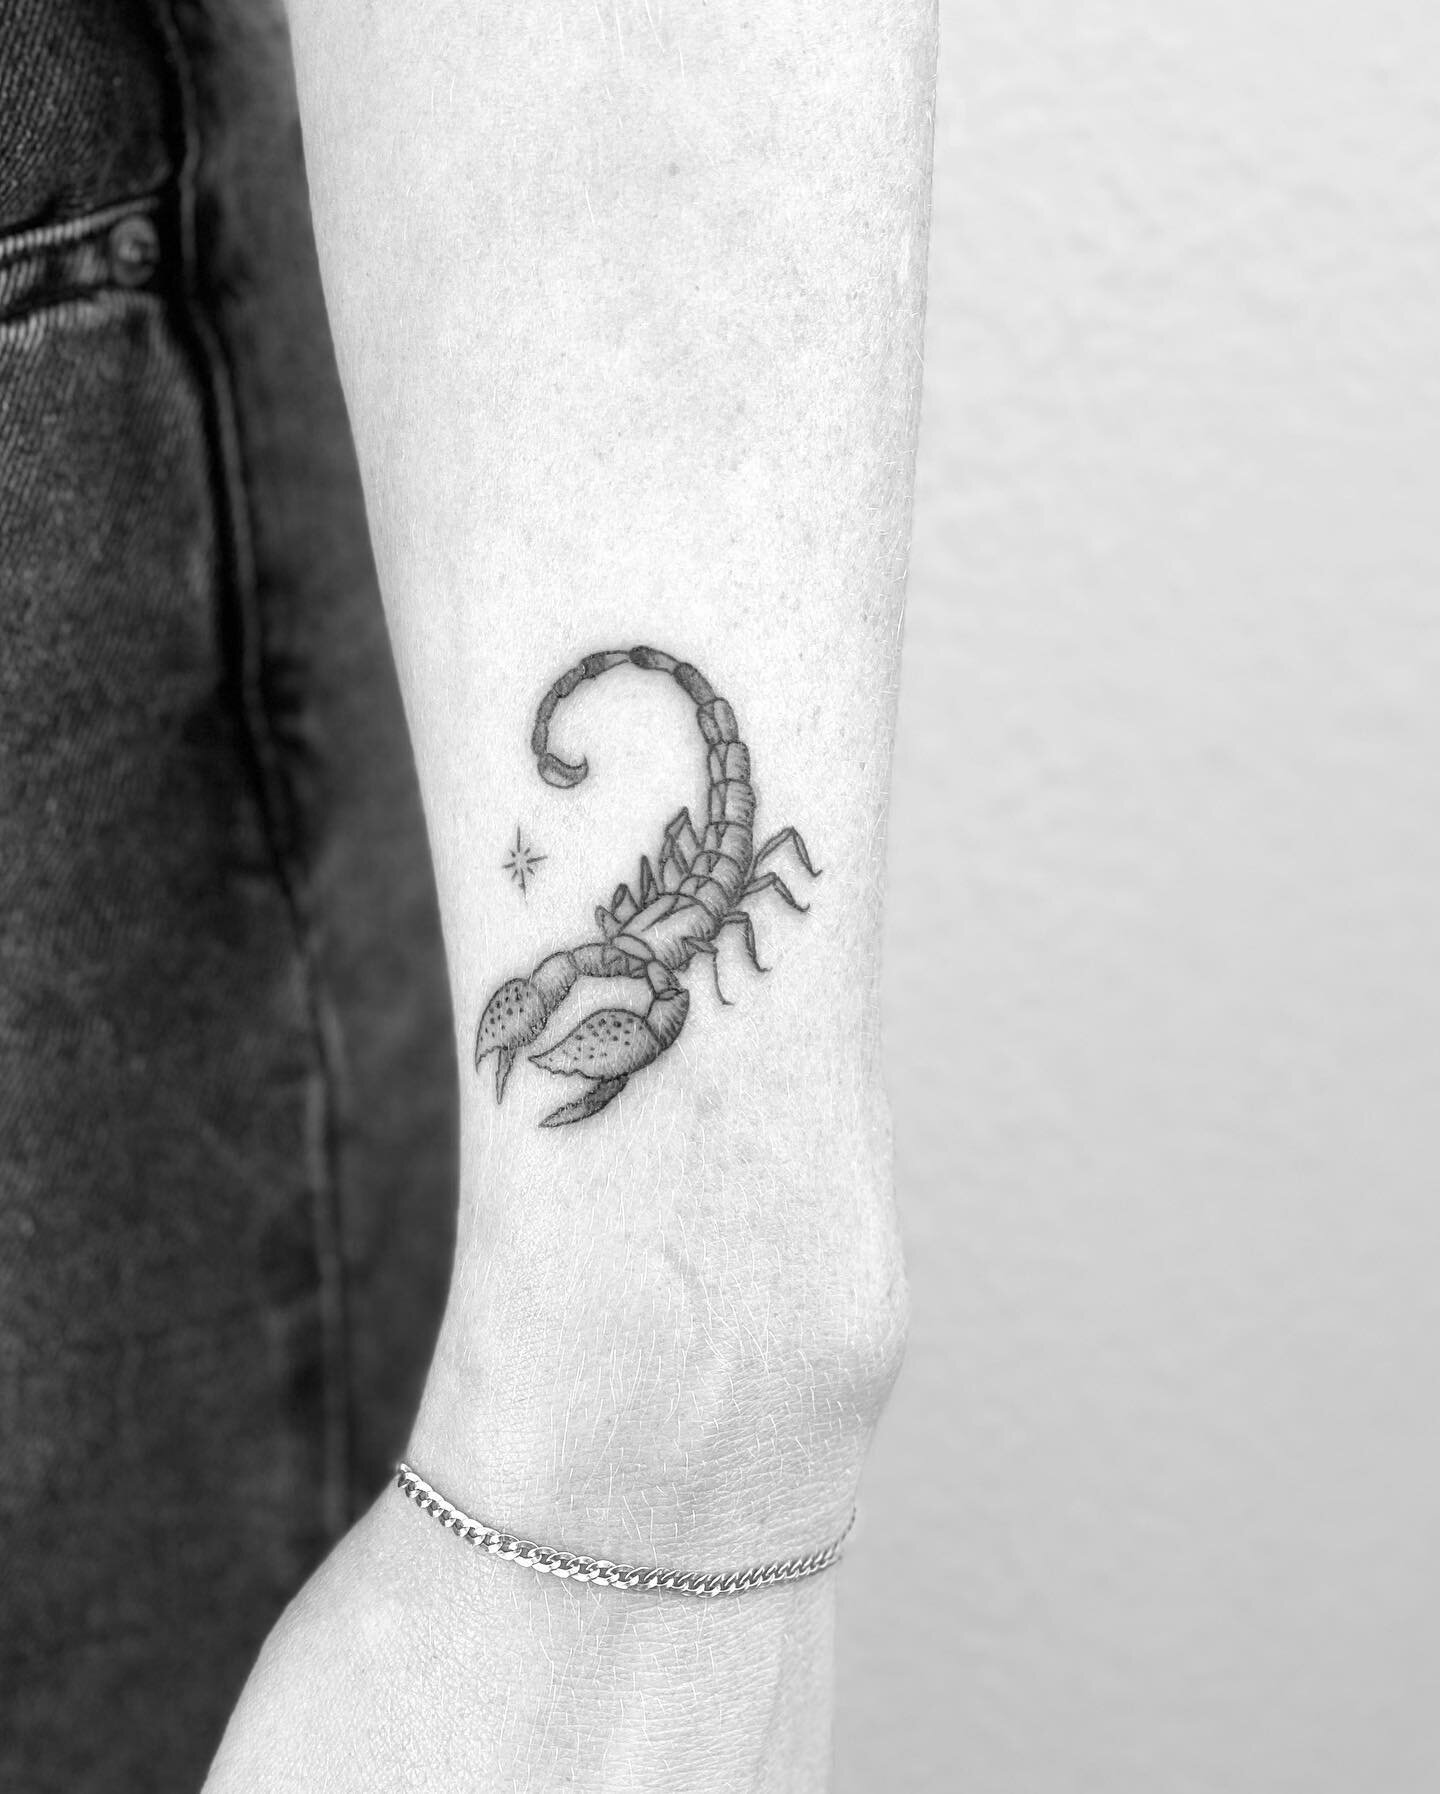 Scorpion ✨ .
.
.
.
.
#tattoos #austin #texas #austintattoo  #blxckink #blackworkers #blackwork #blackworkartists #darkartists  #blackworkers_tattoo